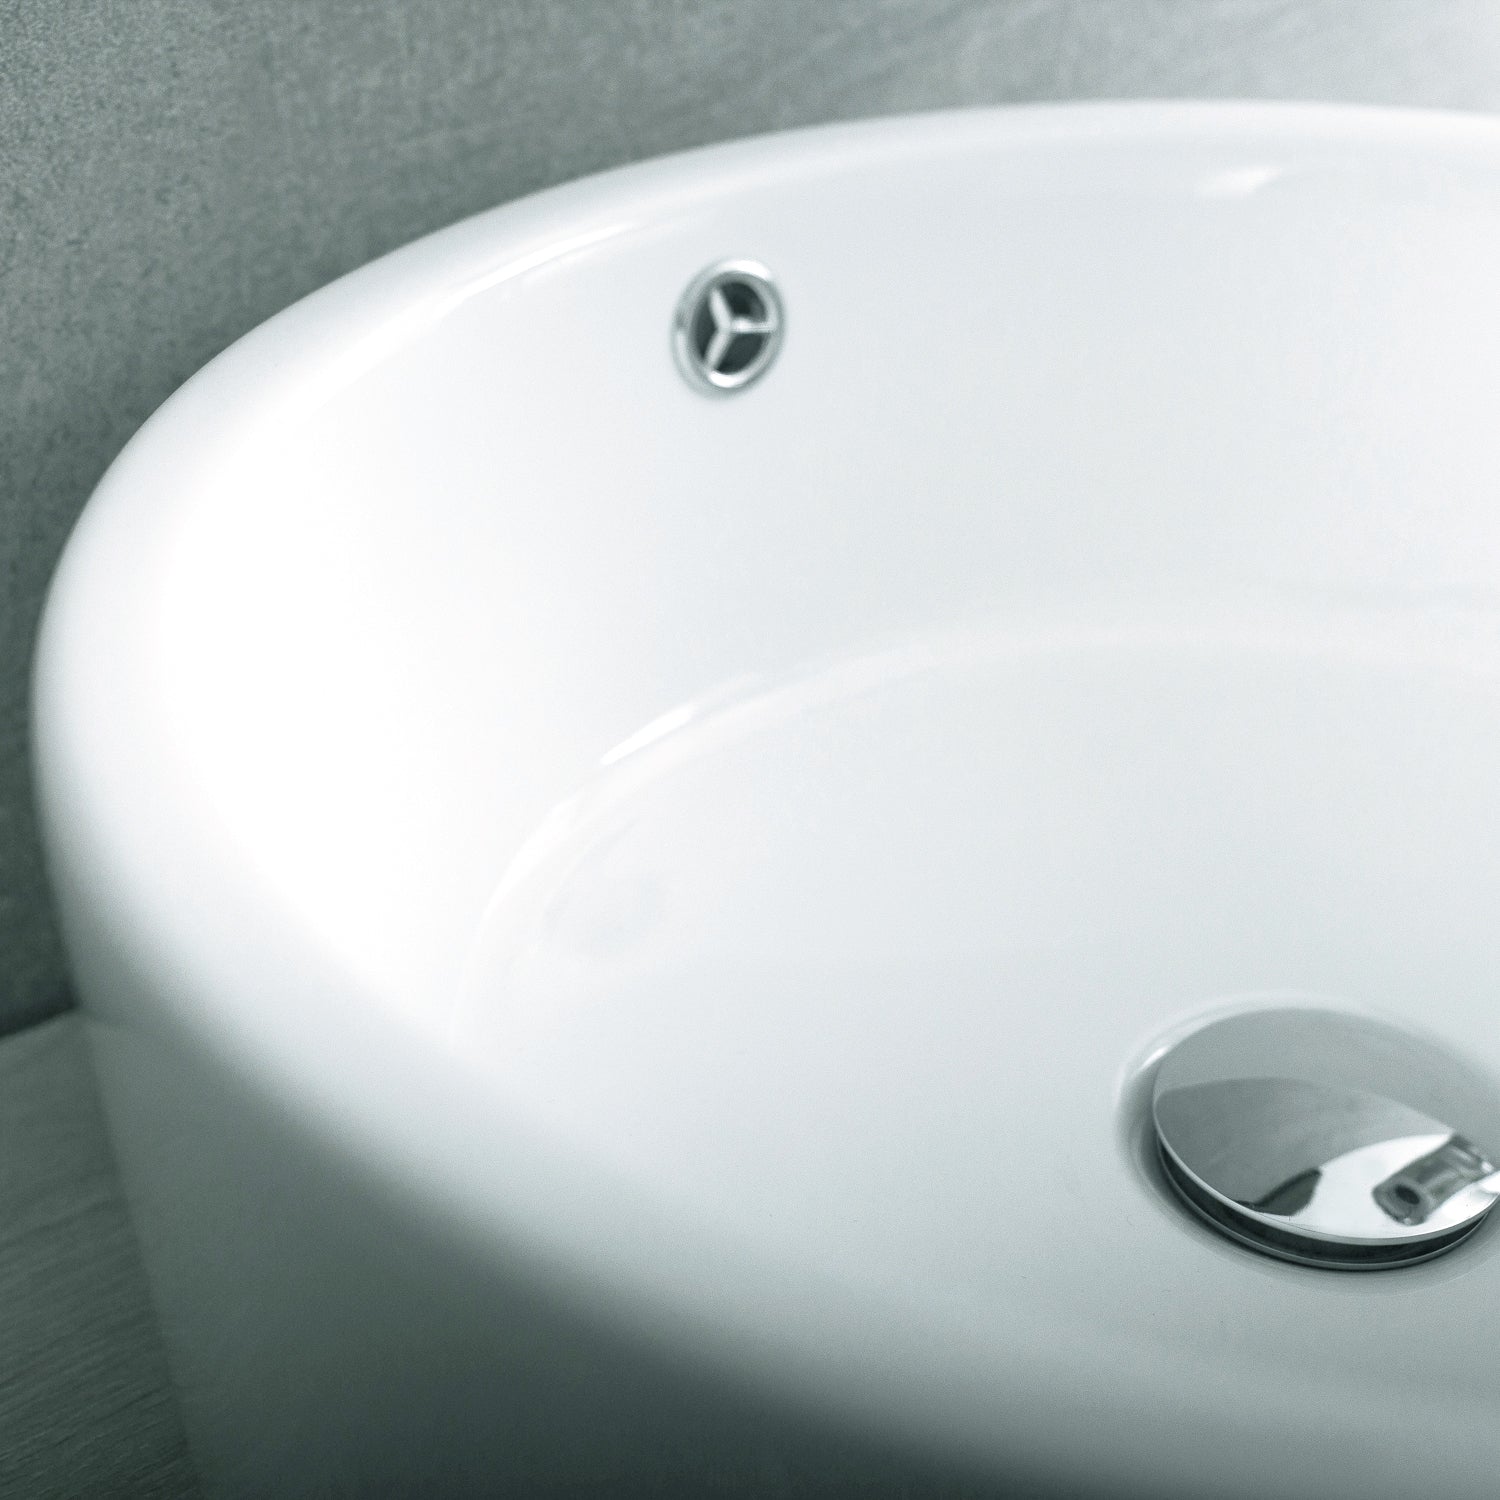 DAX Ceramic Round Single Bowl Bathroom Vessel Sink, White Finish, ?ò 16-1/2 x 4-1/2 Inches (BSN-218)